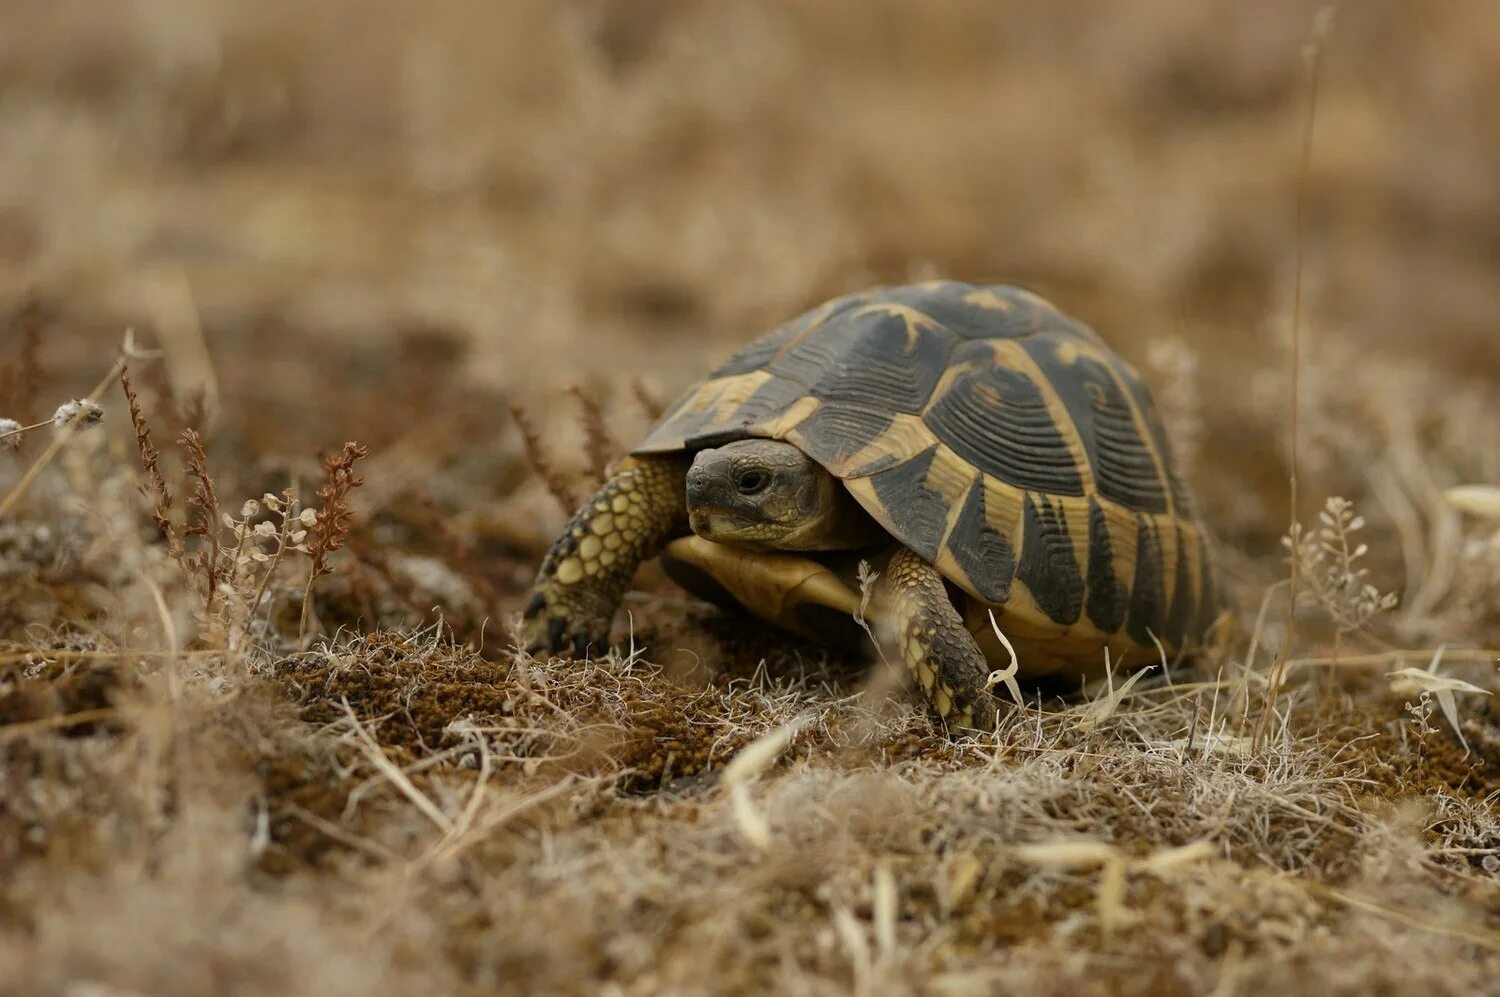 Testudo Hermanni. Среднеазиатская черепаха. Средиземноморская черепаха. Среднеазиатская черепаха гуччи.